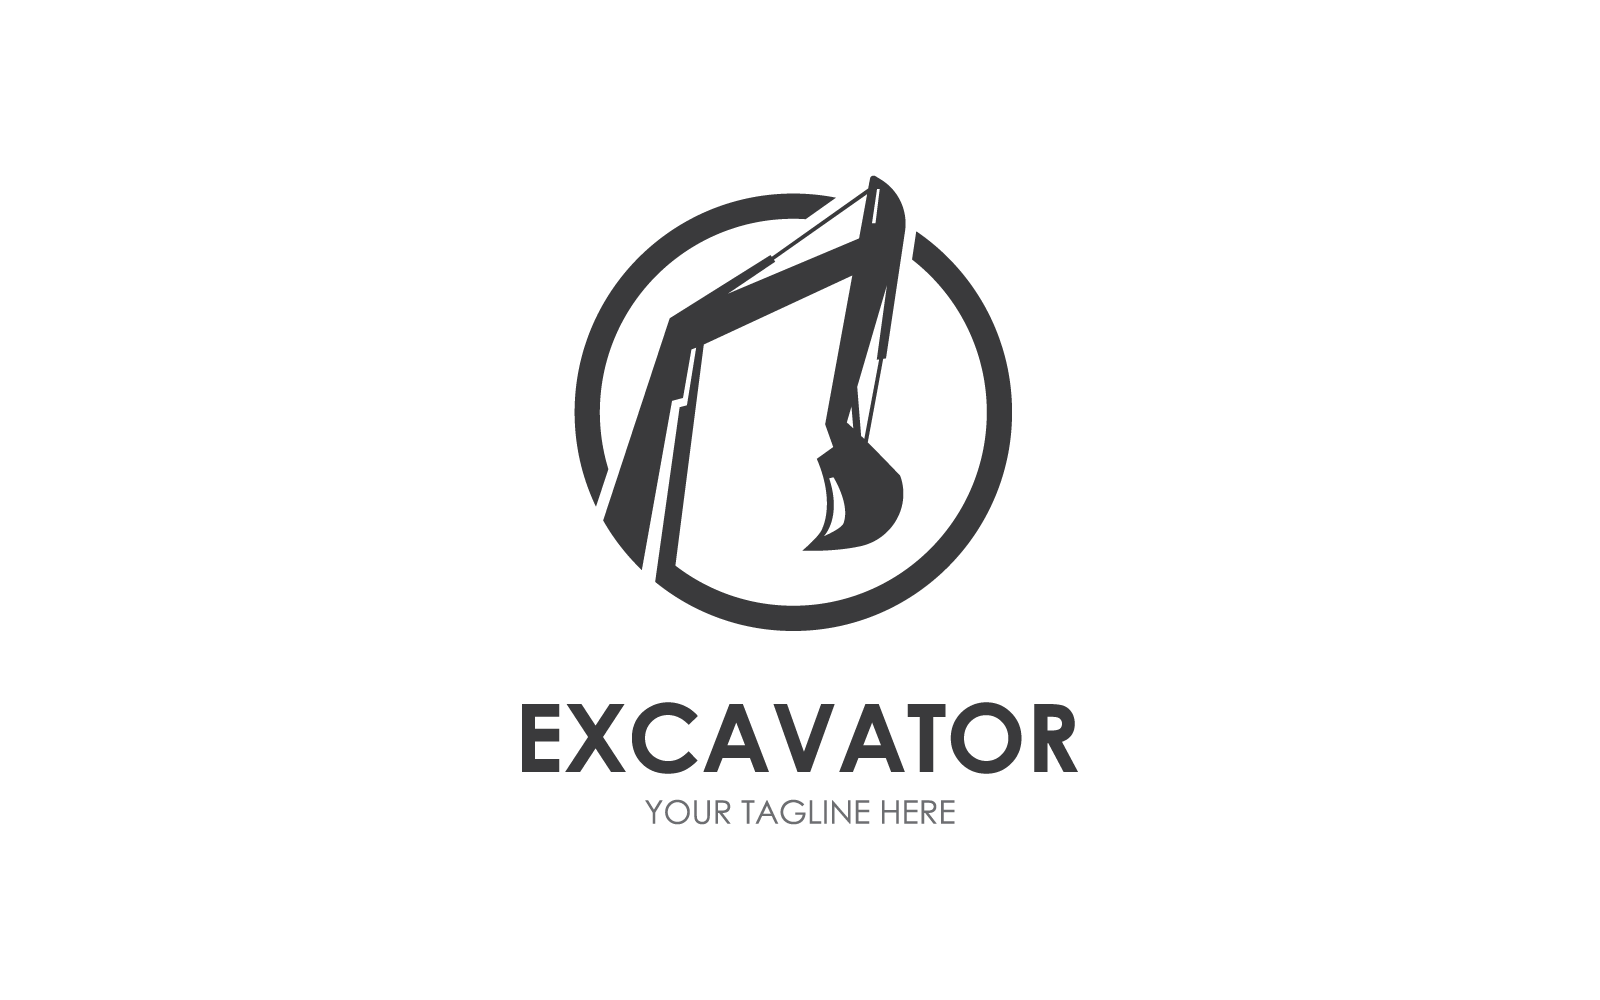 Excavator illustration logo vector template